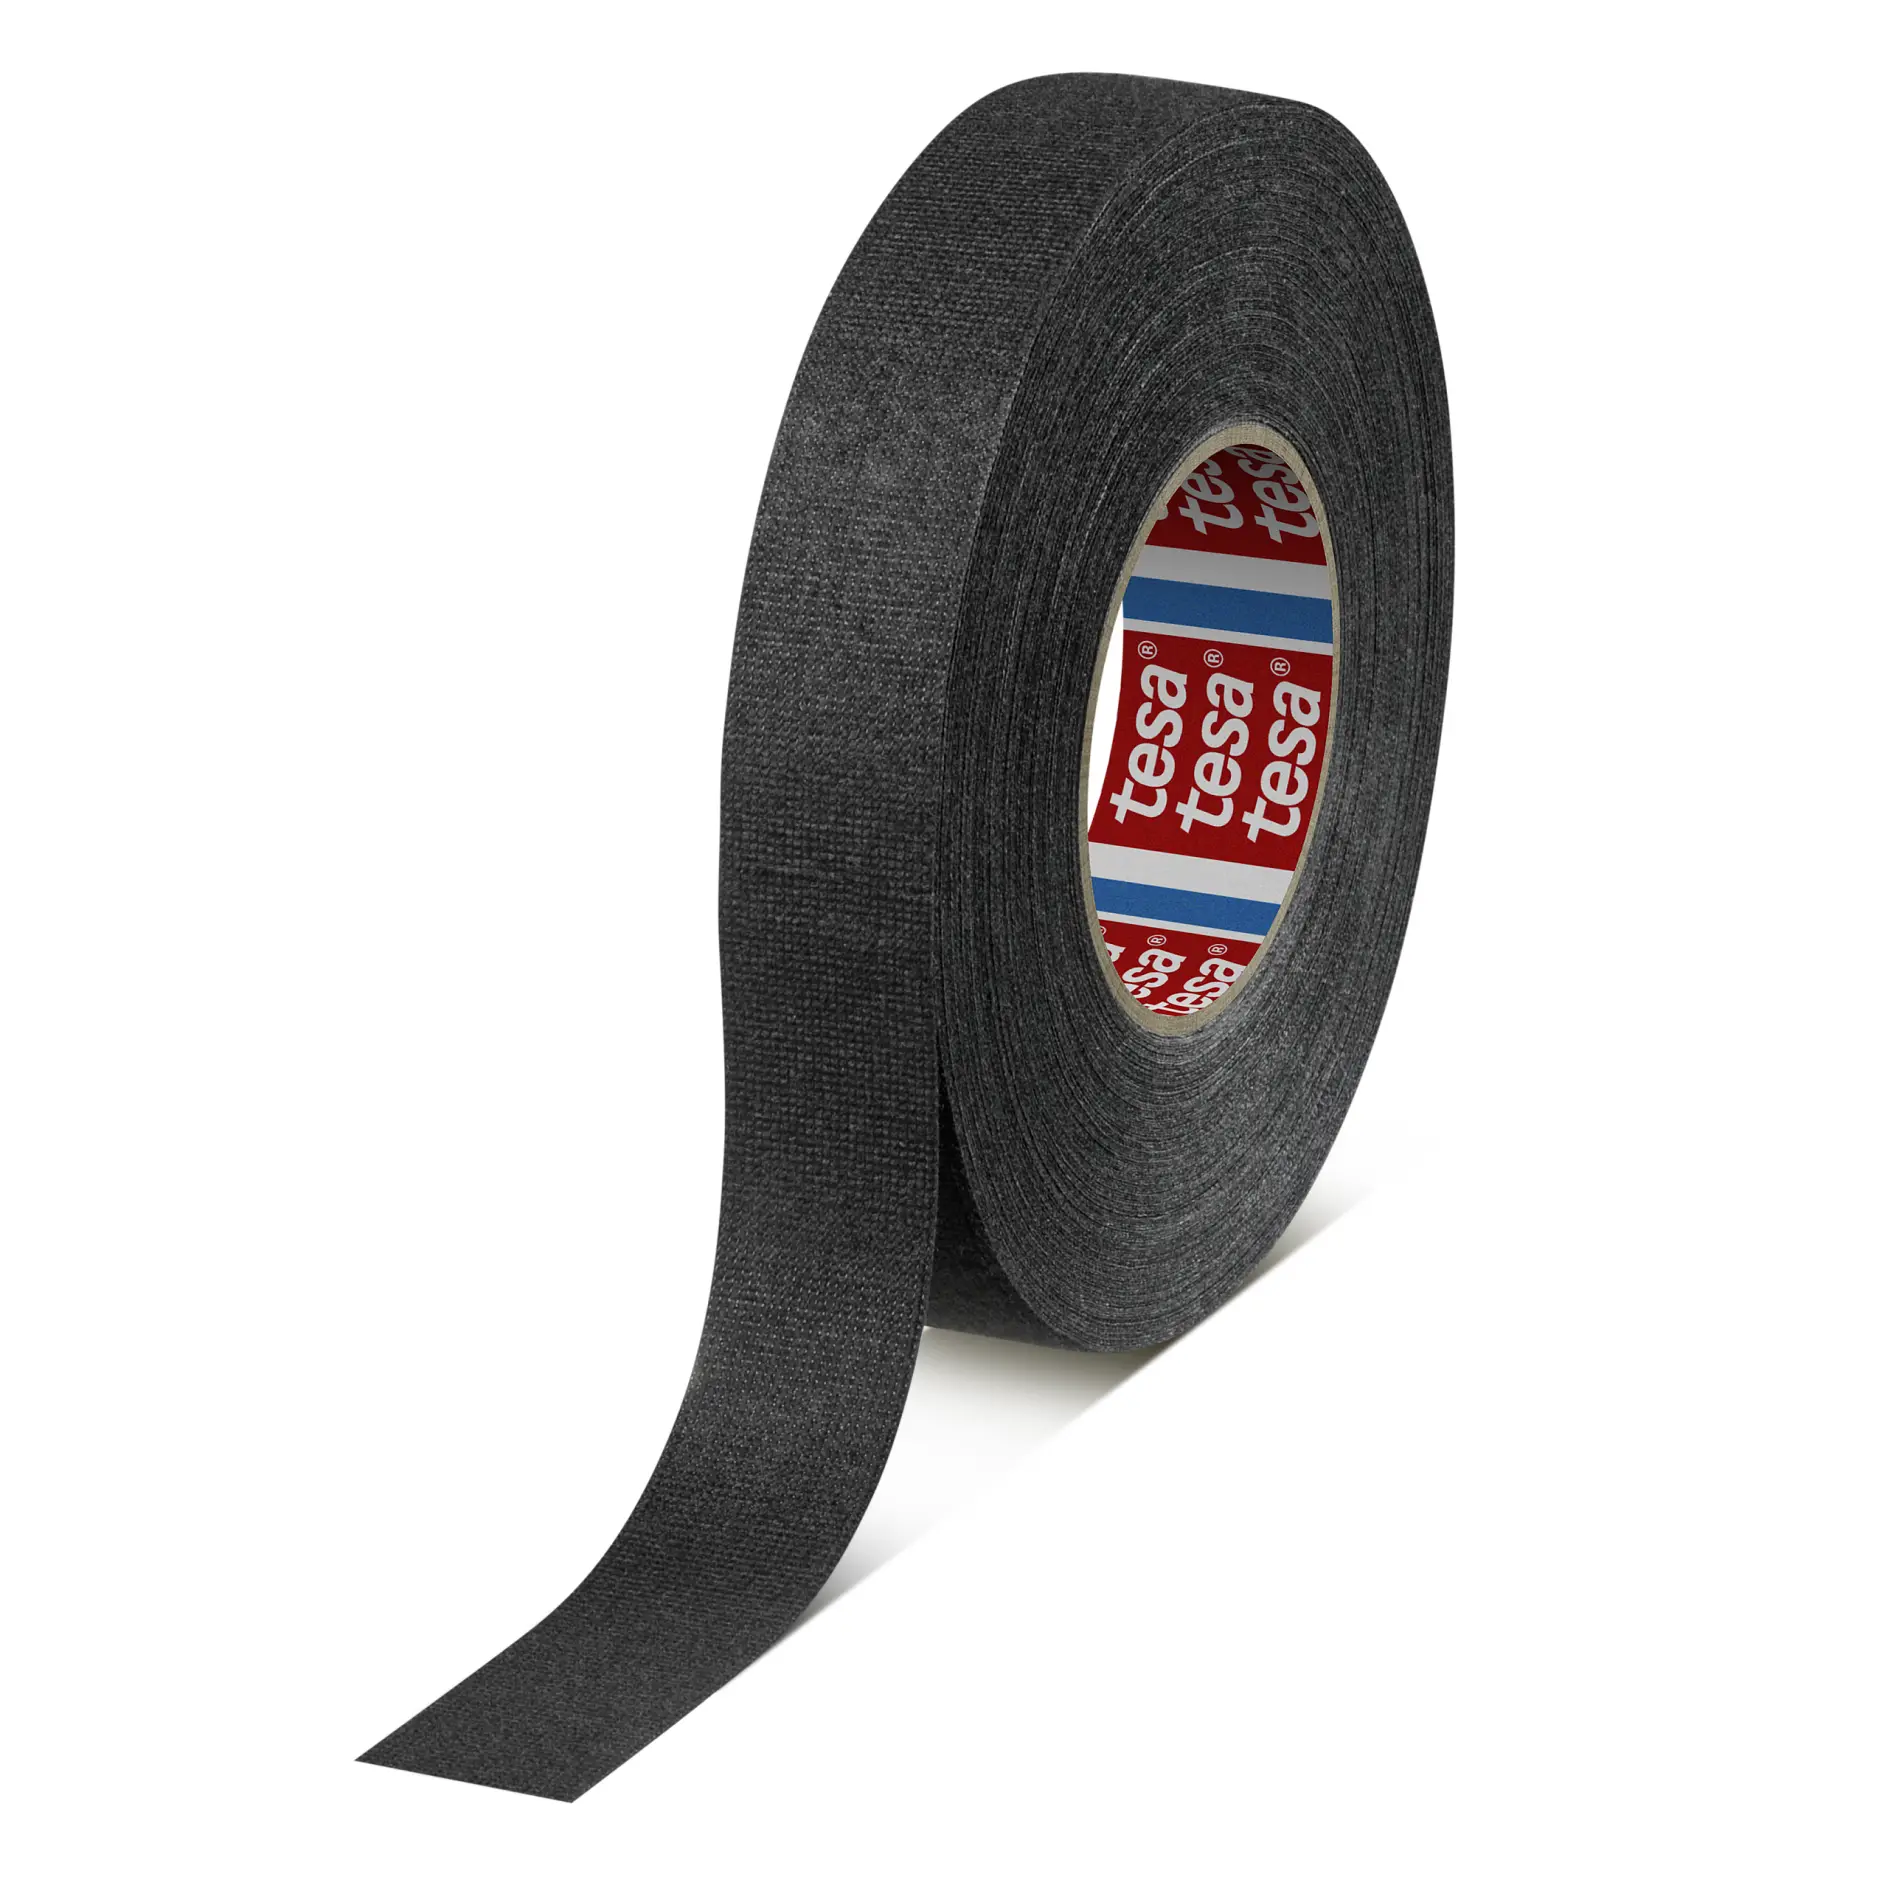 tesa-51609-pet-fleece-tape-flexibility-noise-damping-black-516090000600-pr